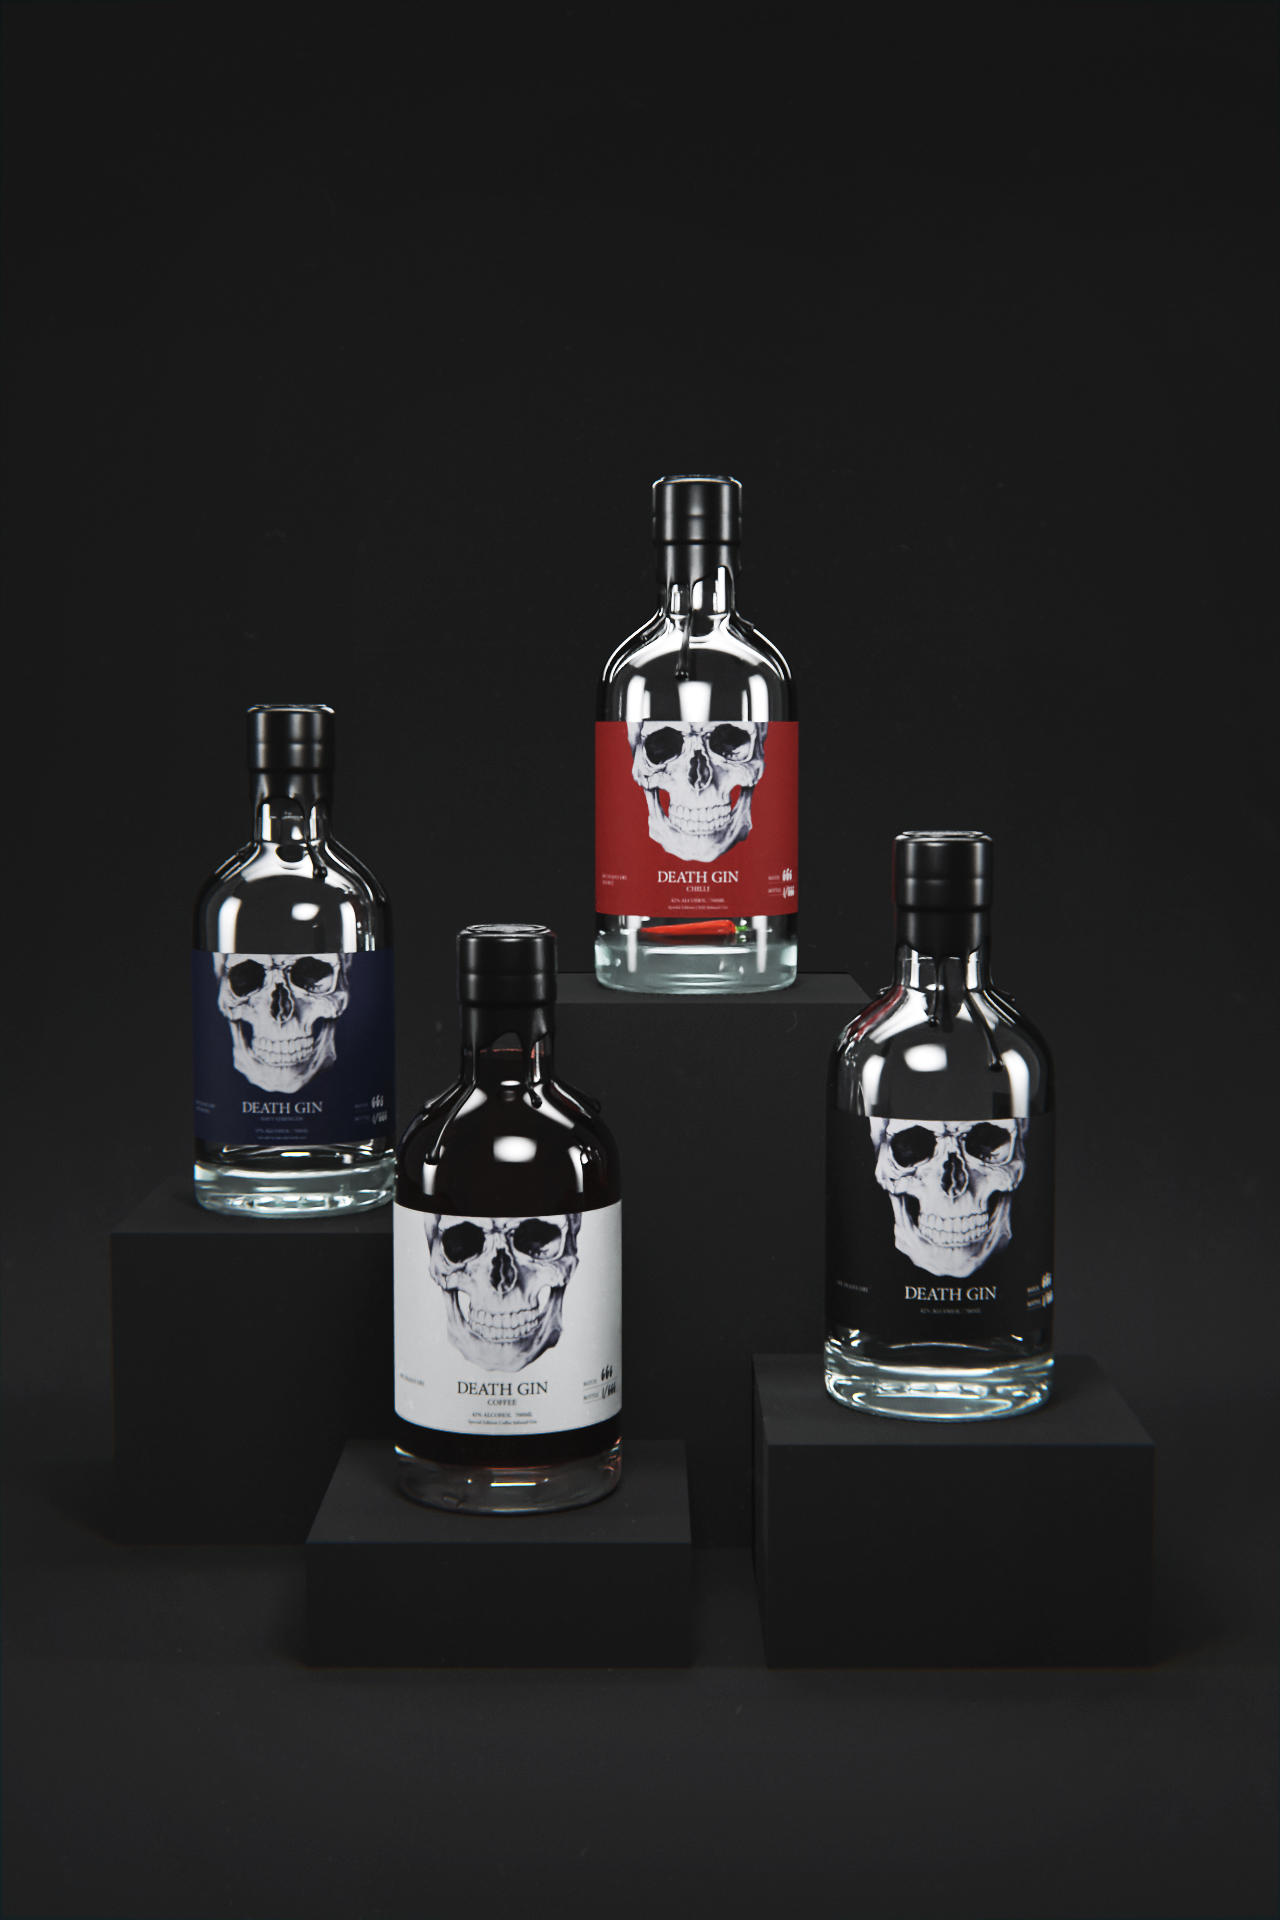 4Bottles Comp - Death gin 3D product visualization - Sonny Nguyen